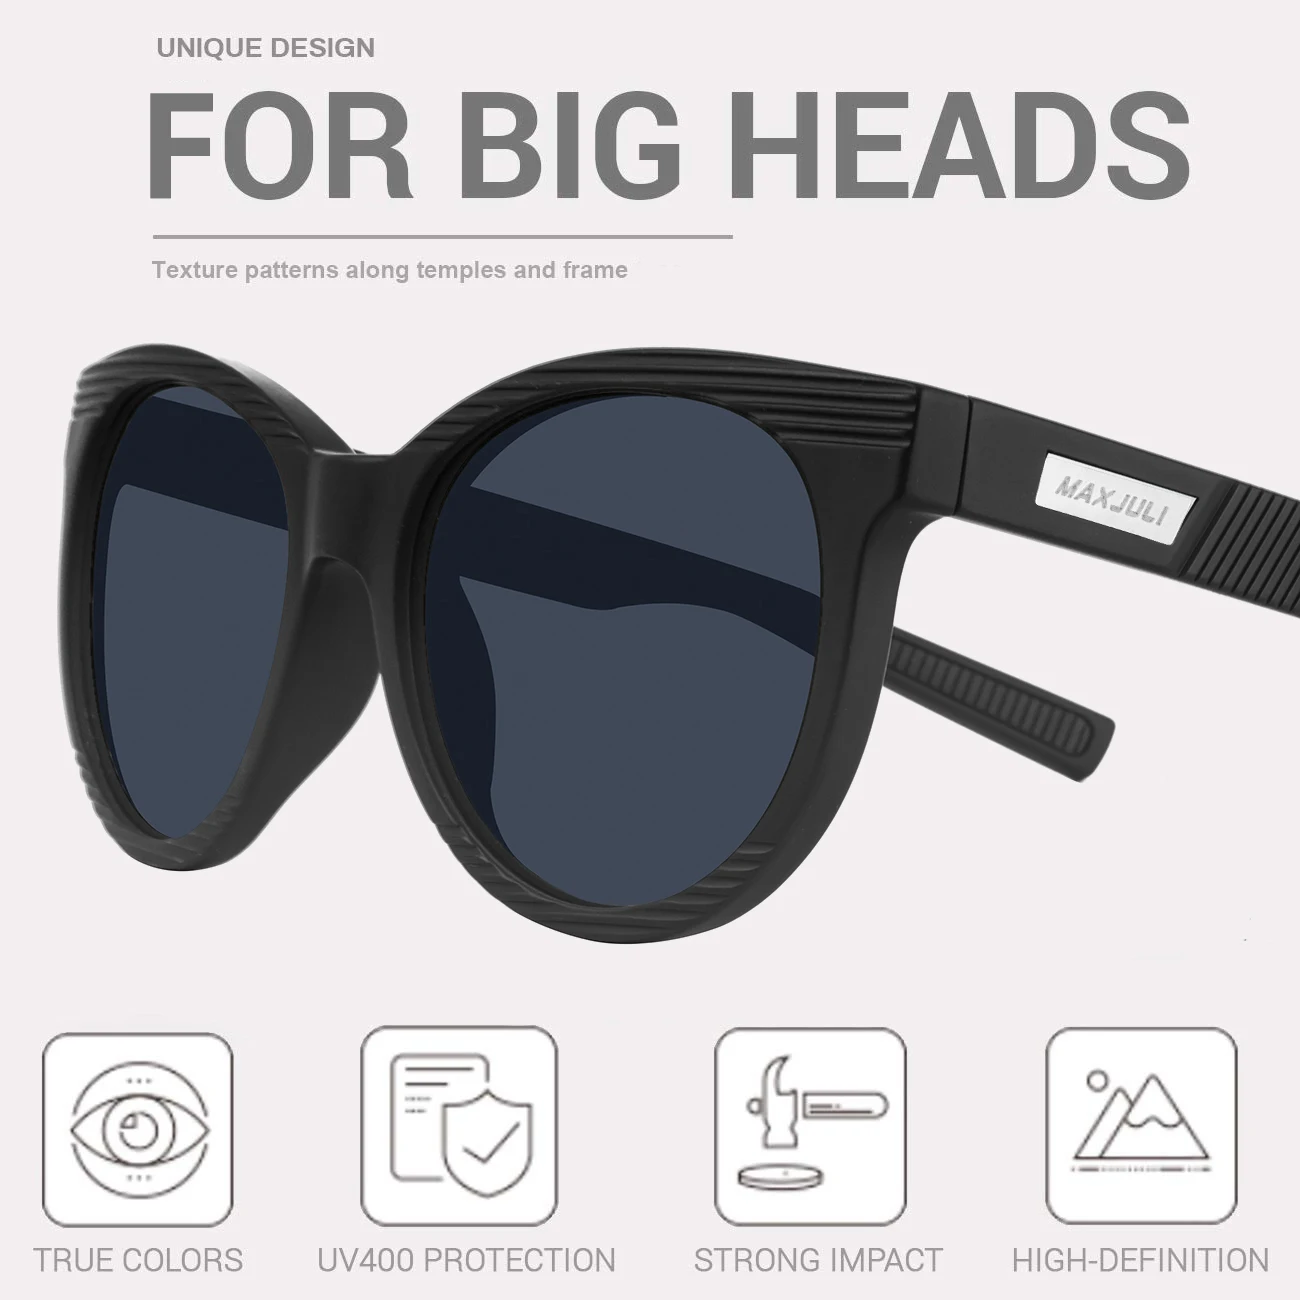 MAXJULI Polarized Round Sunglasses for Women Men with Big Heads